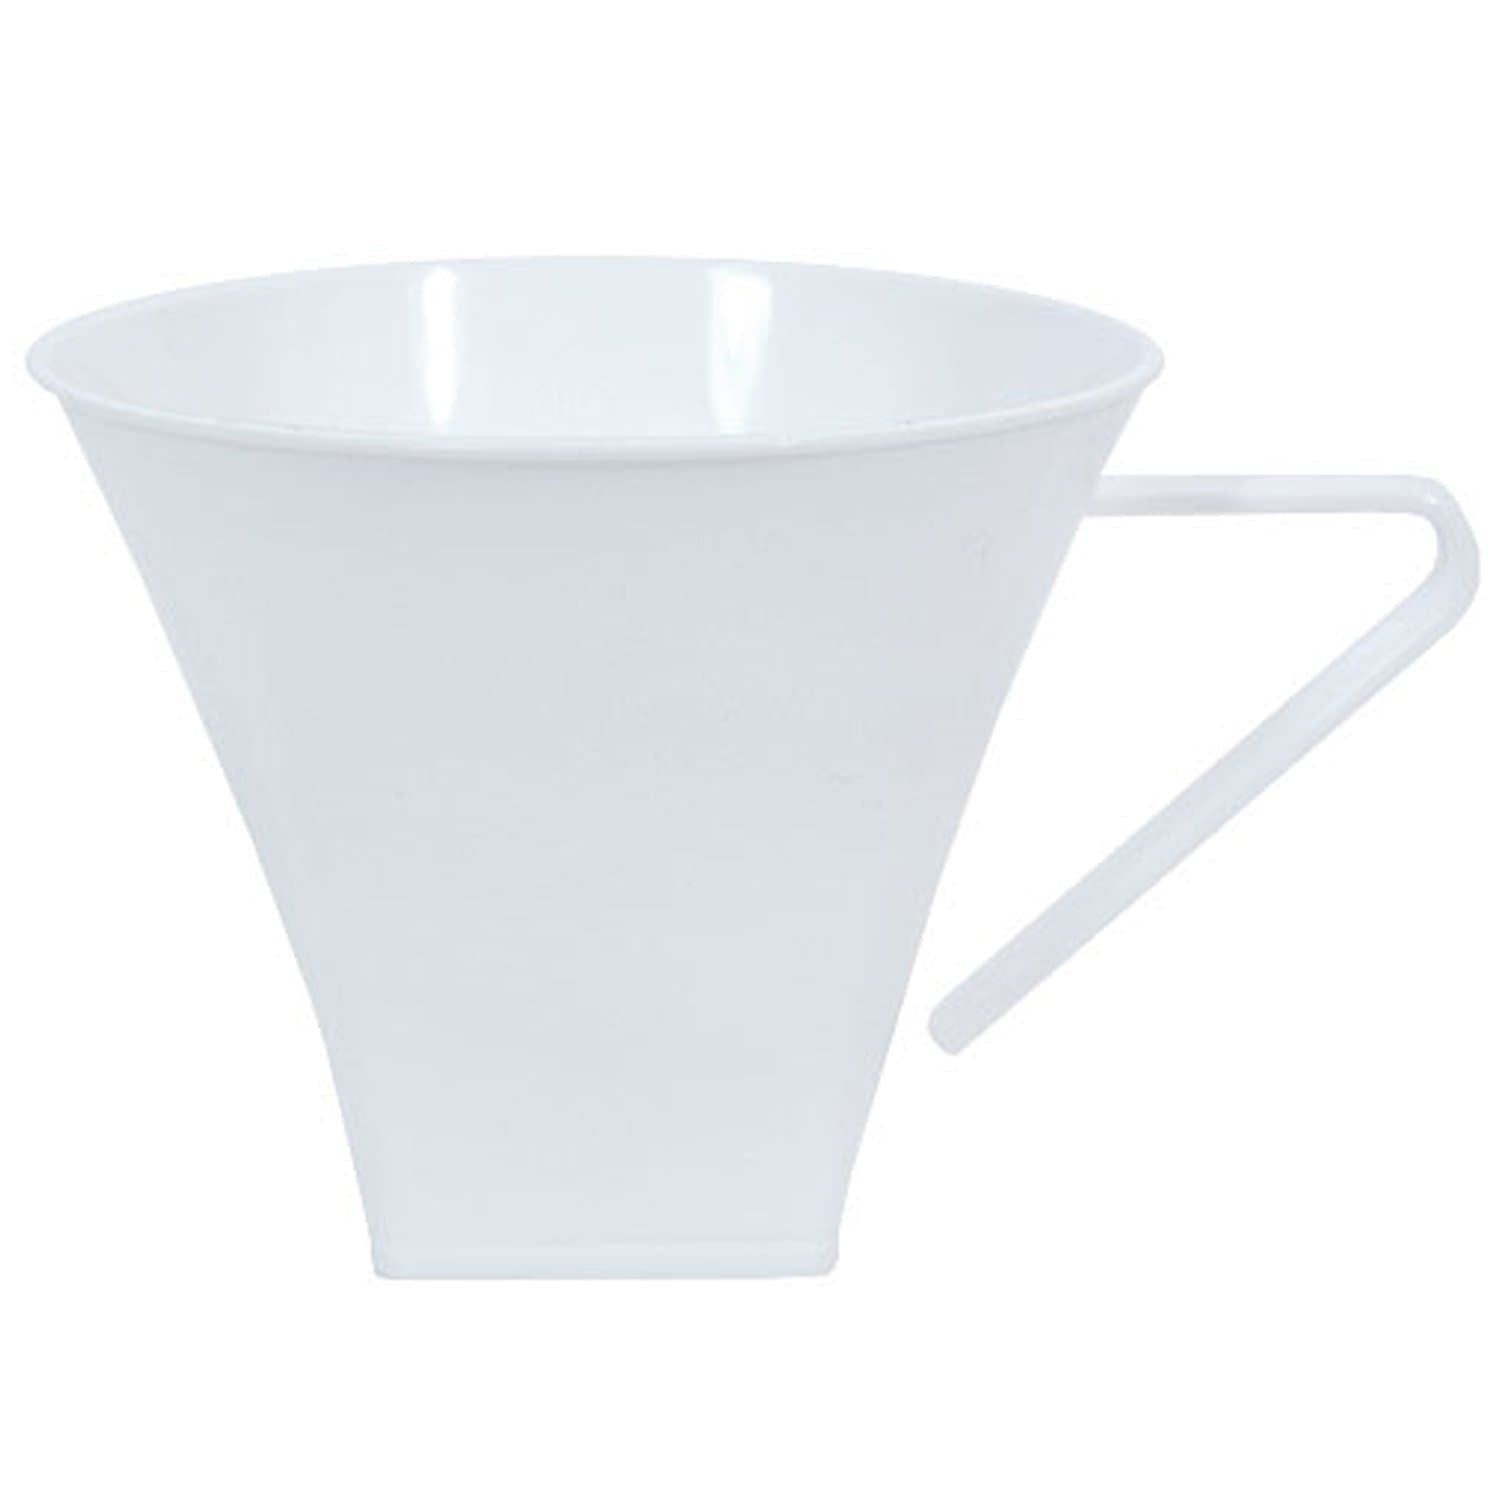 SALE Mug Flared Pearl Plastic Square Coffee 8 oz 8ct Cups Lillian   